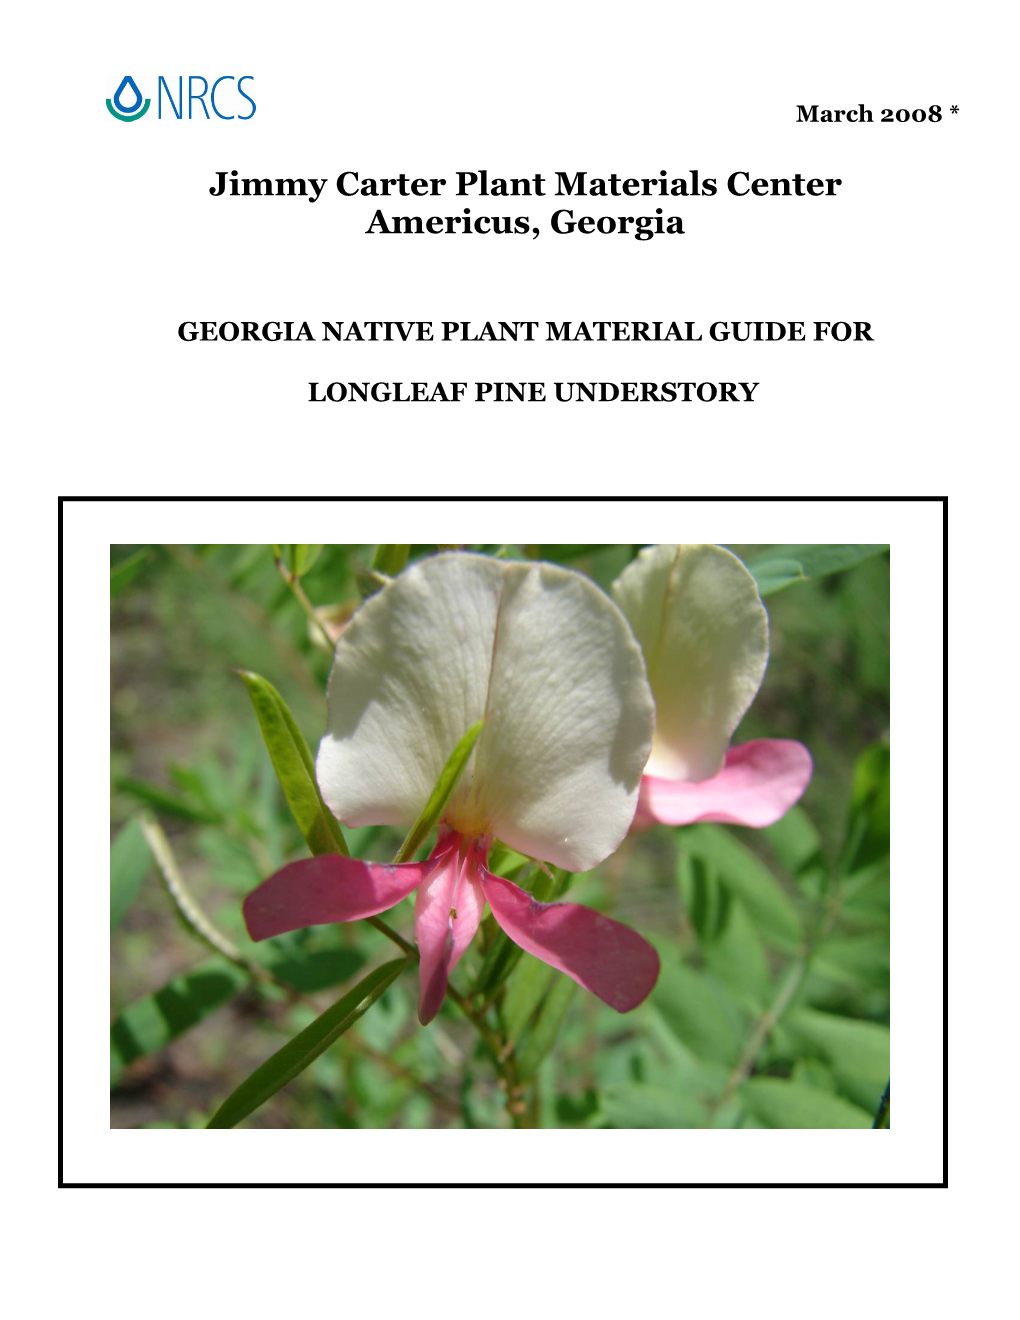 Jimmy Carter Plant Materials Center Americus, Georgia